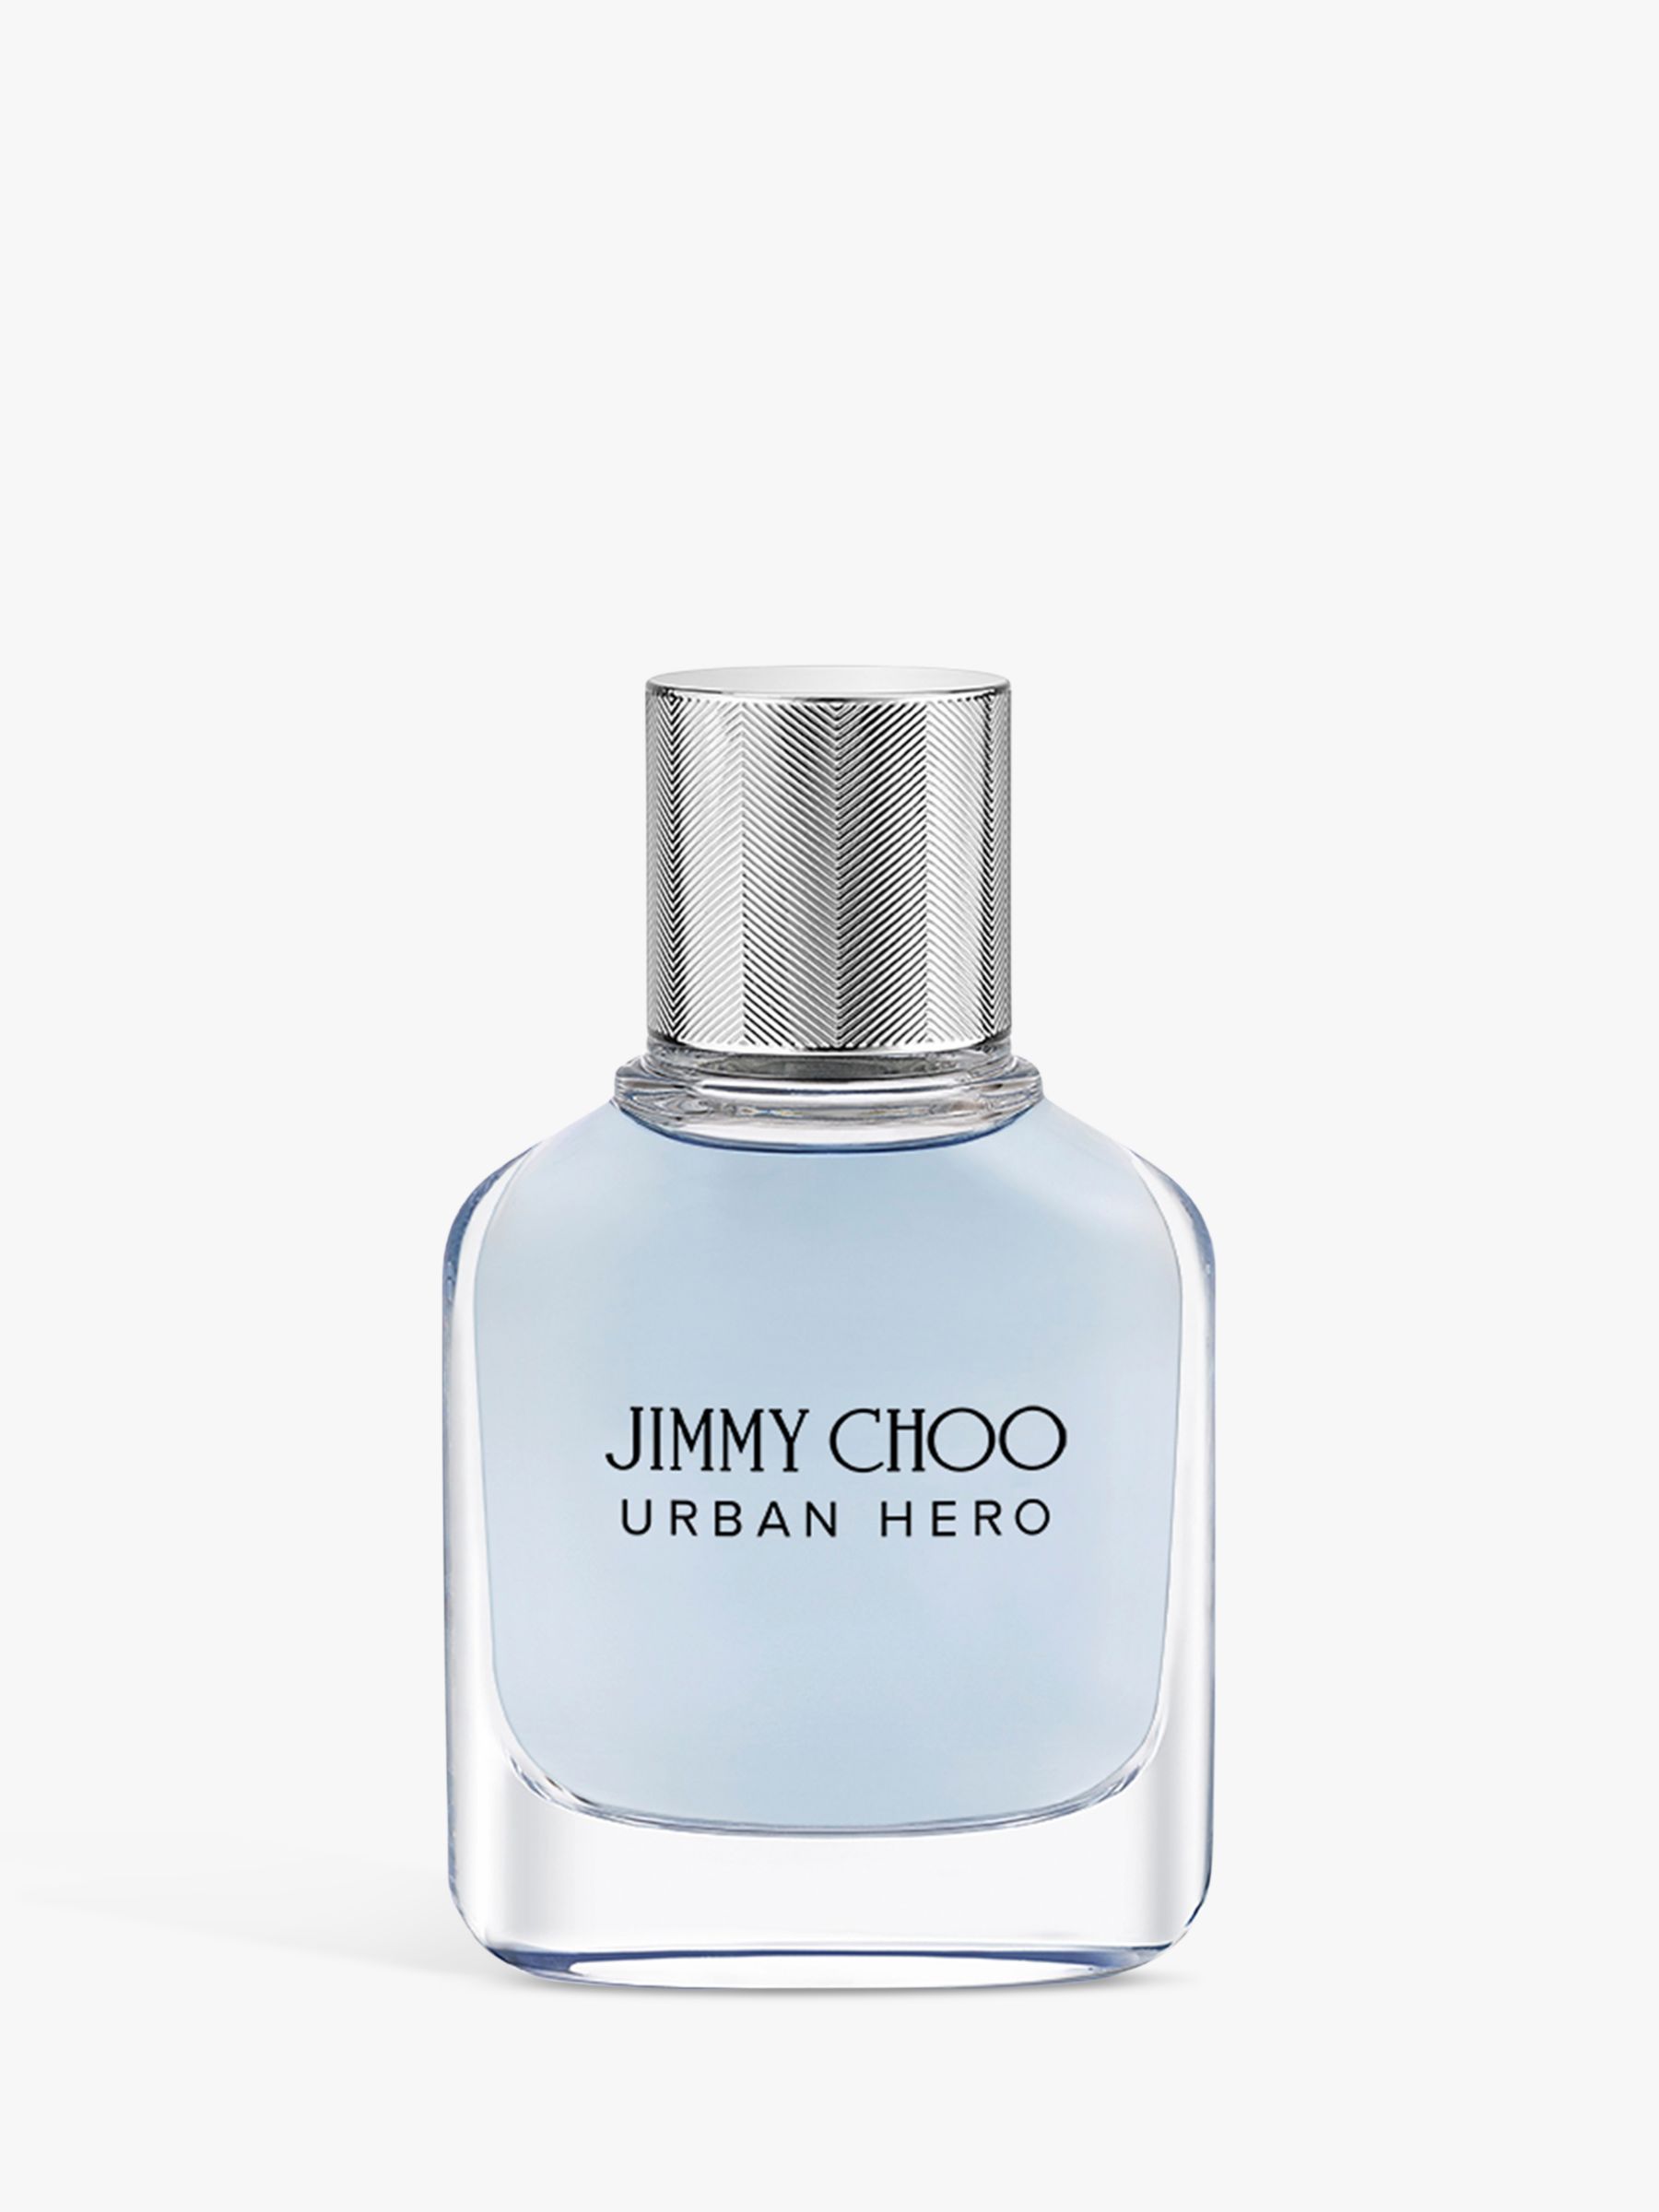 Jimmy Choo Urban Hero Eau de Parfum, 30ml 1